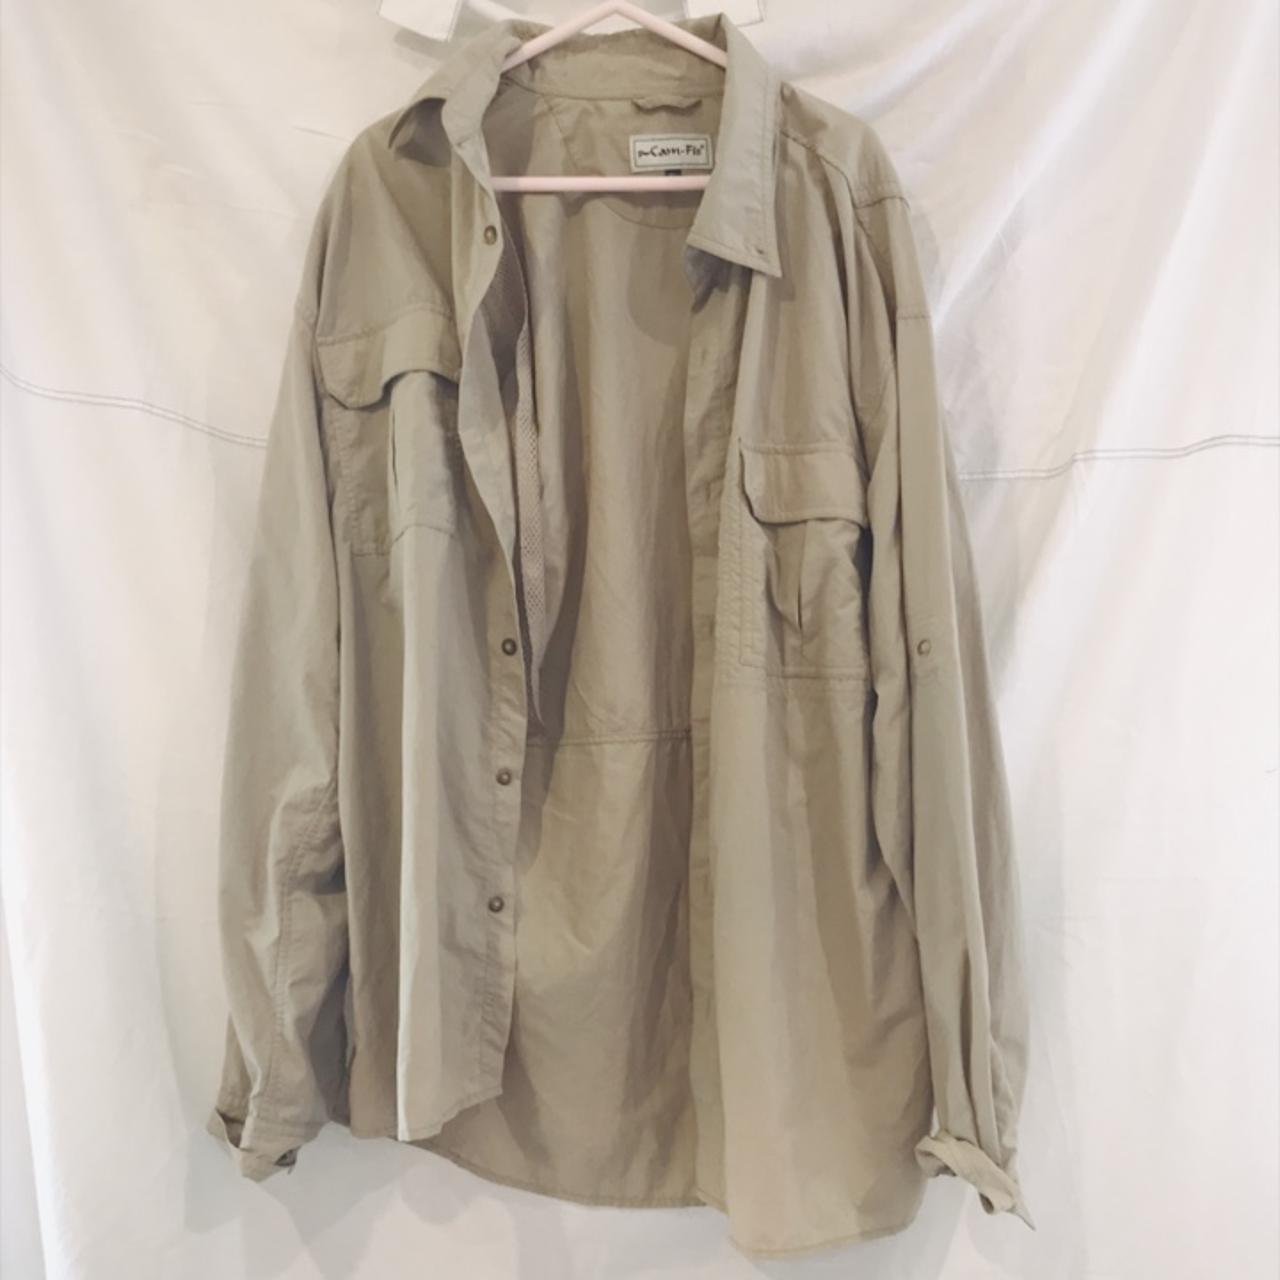 amazing vintage cami jacket 🧚 💕 such a regretful... - Depop